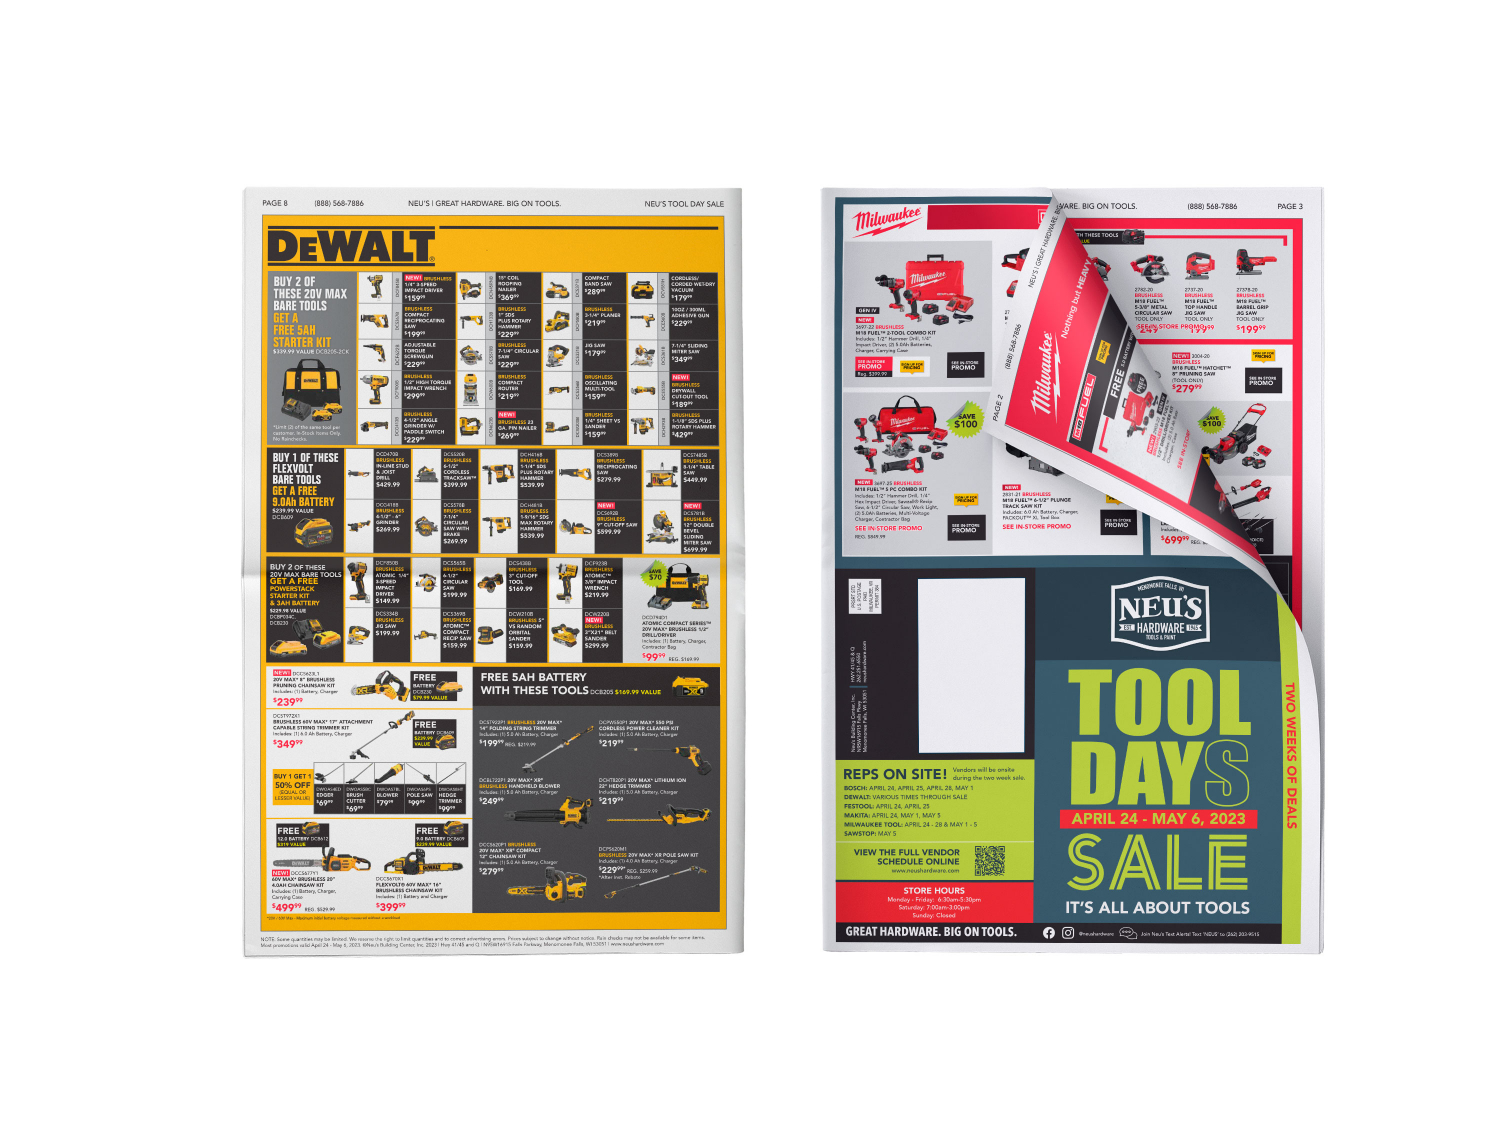 Neu's Tool Day(s) Sale » Neus Hardware Tools Paint